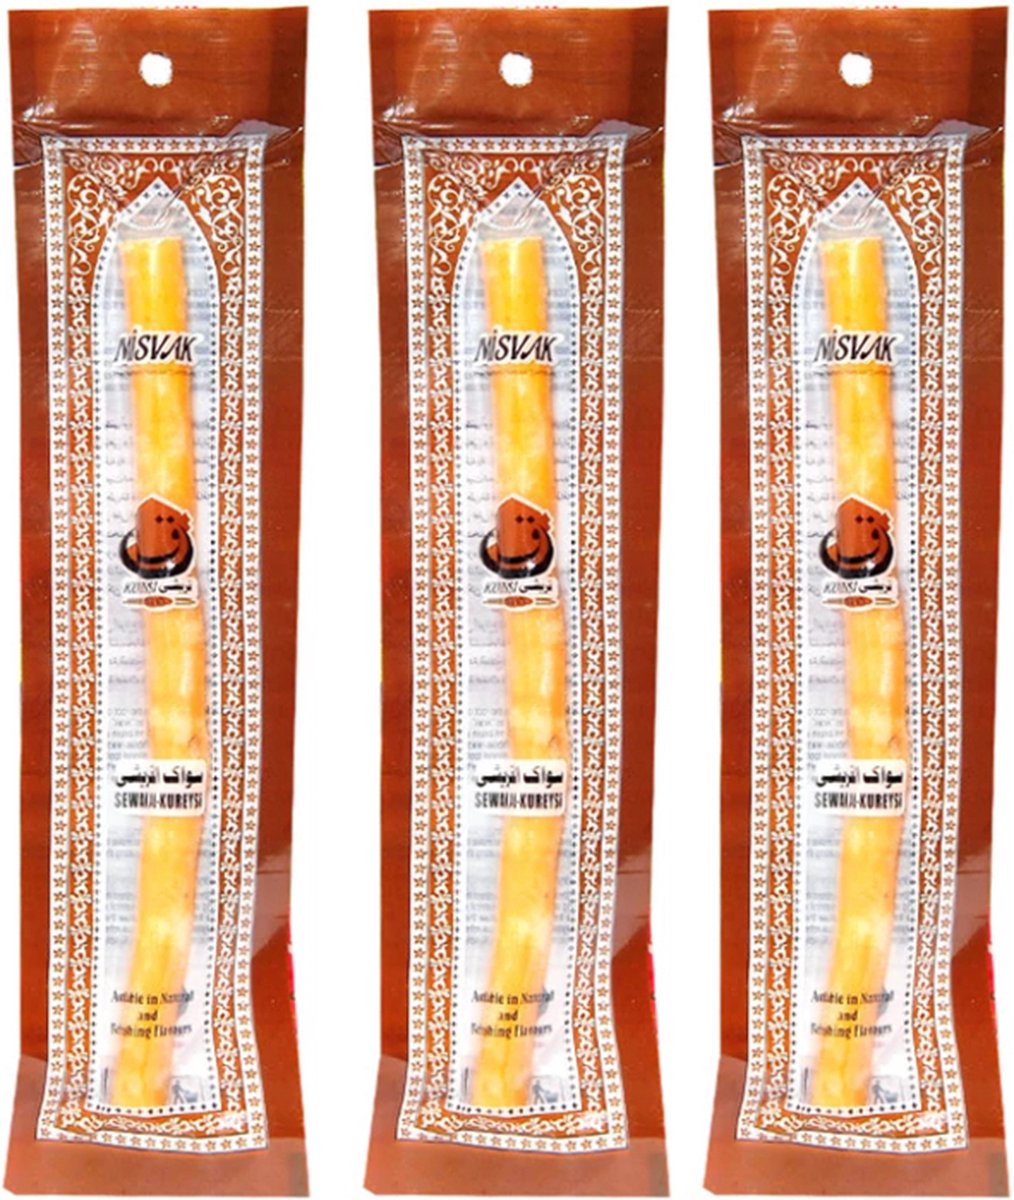 Kureysi Miswak - Misvak - 3 Stuks Set - De traditionele Natuurlijke Tandenborstel - Sewak Al-Kureysi - Sewak Al-Qurayshi - Arak - Medium